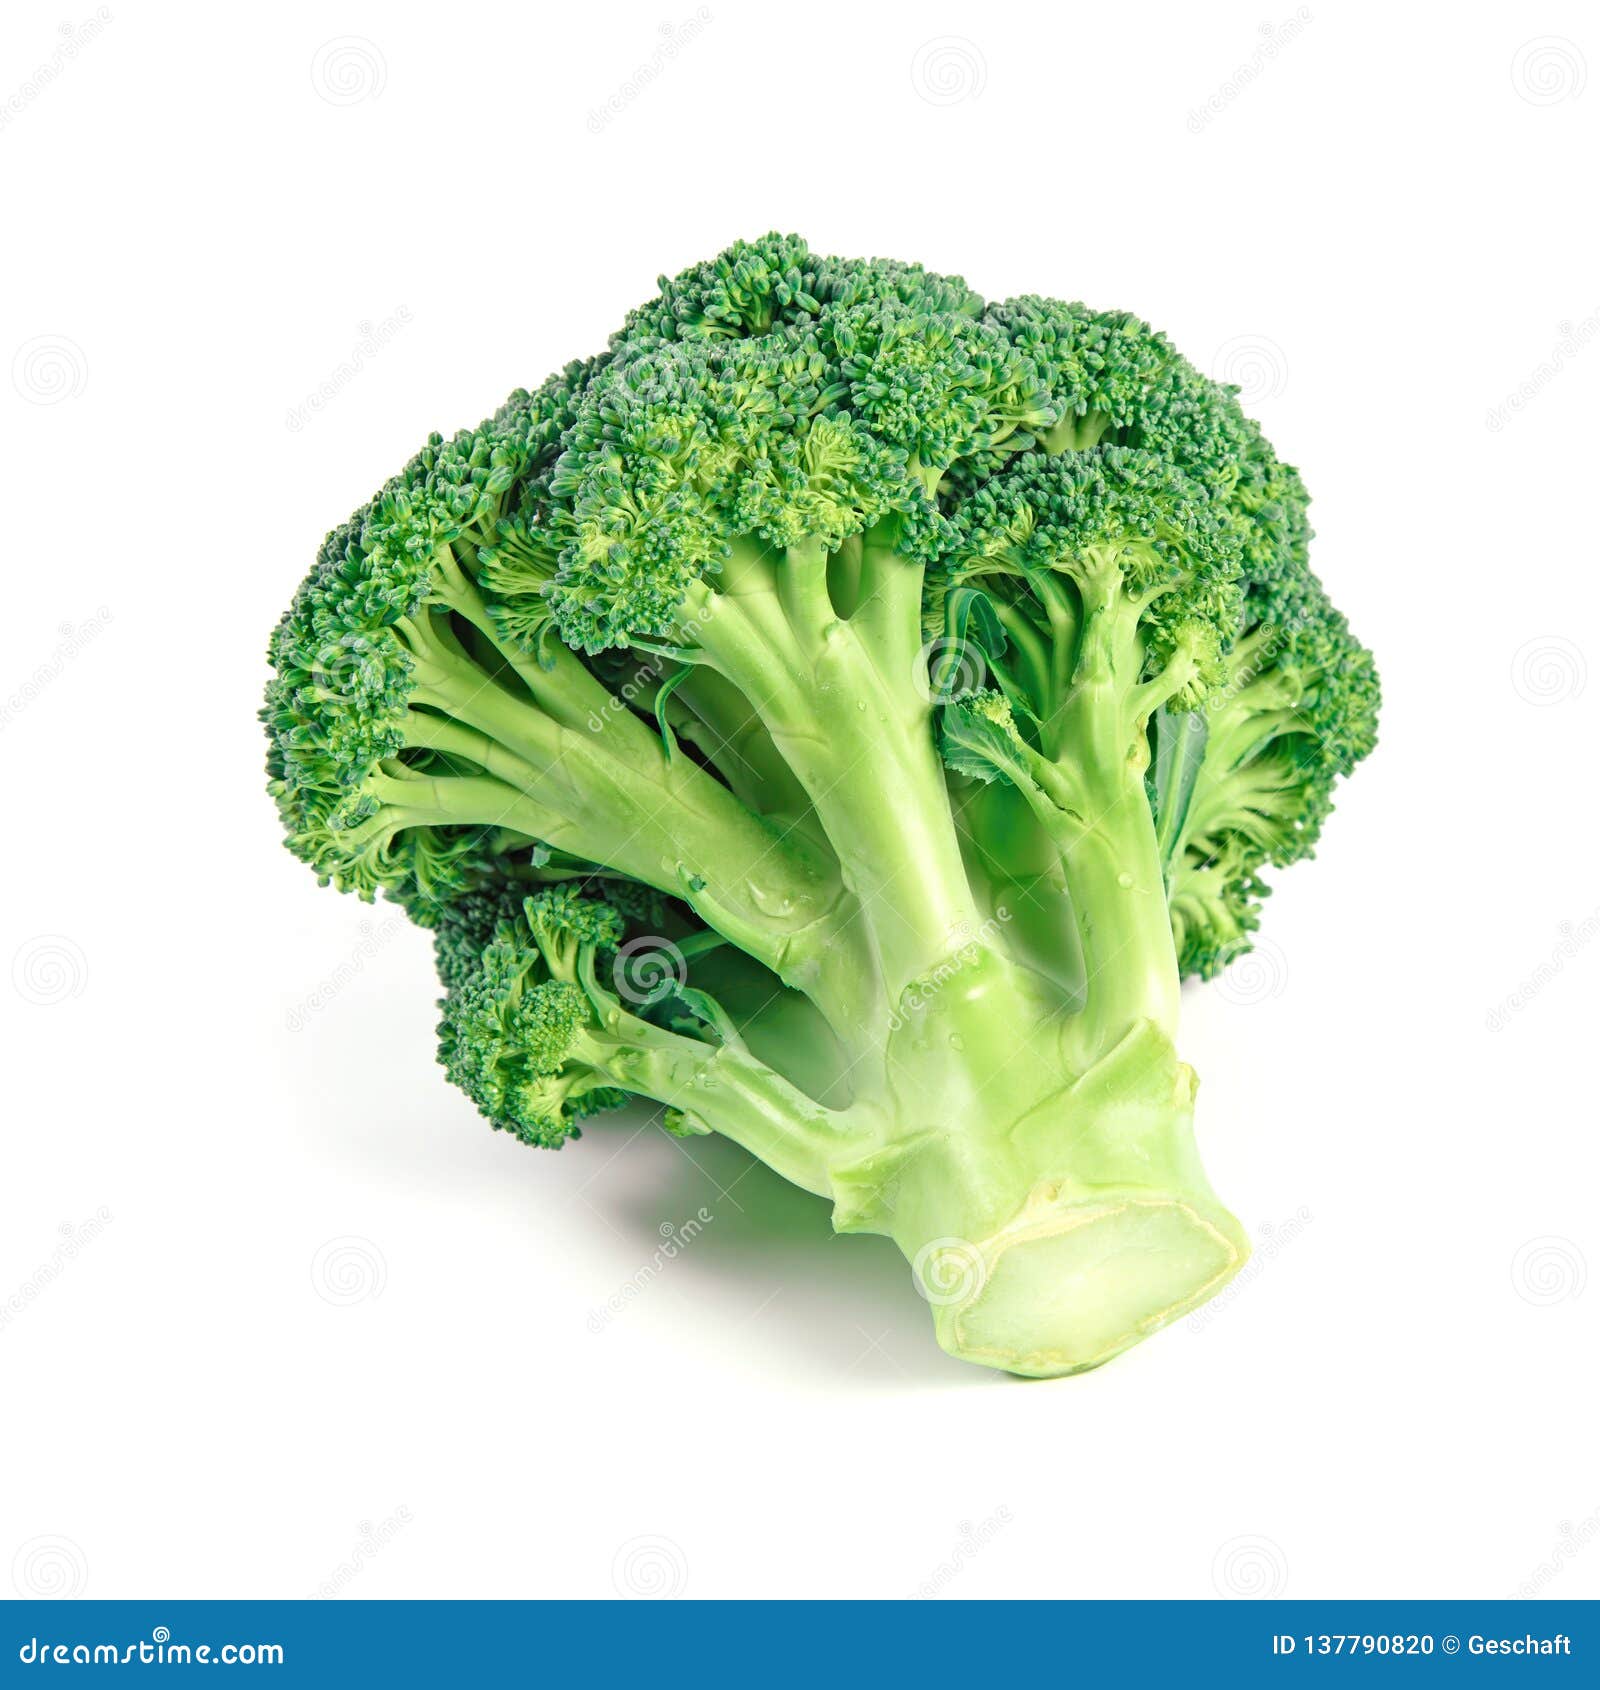 raw fresh broccoli as healphy food  on white